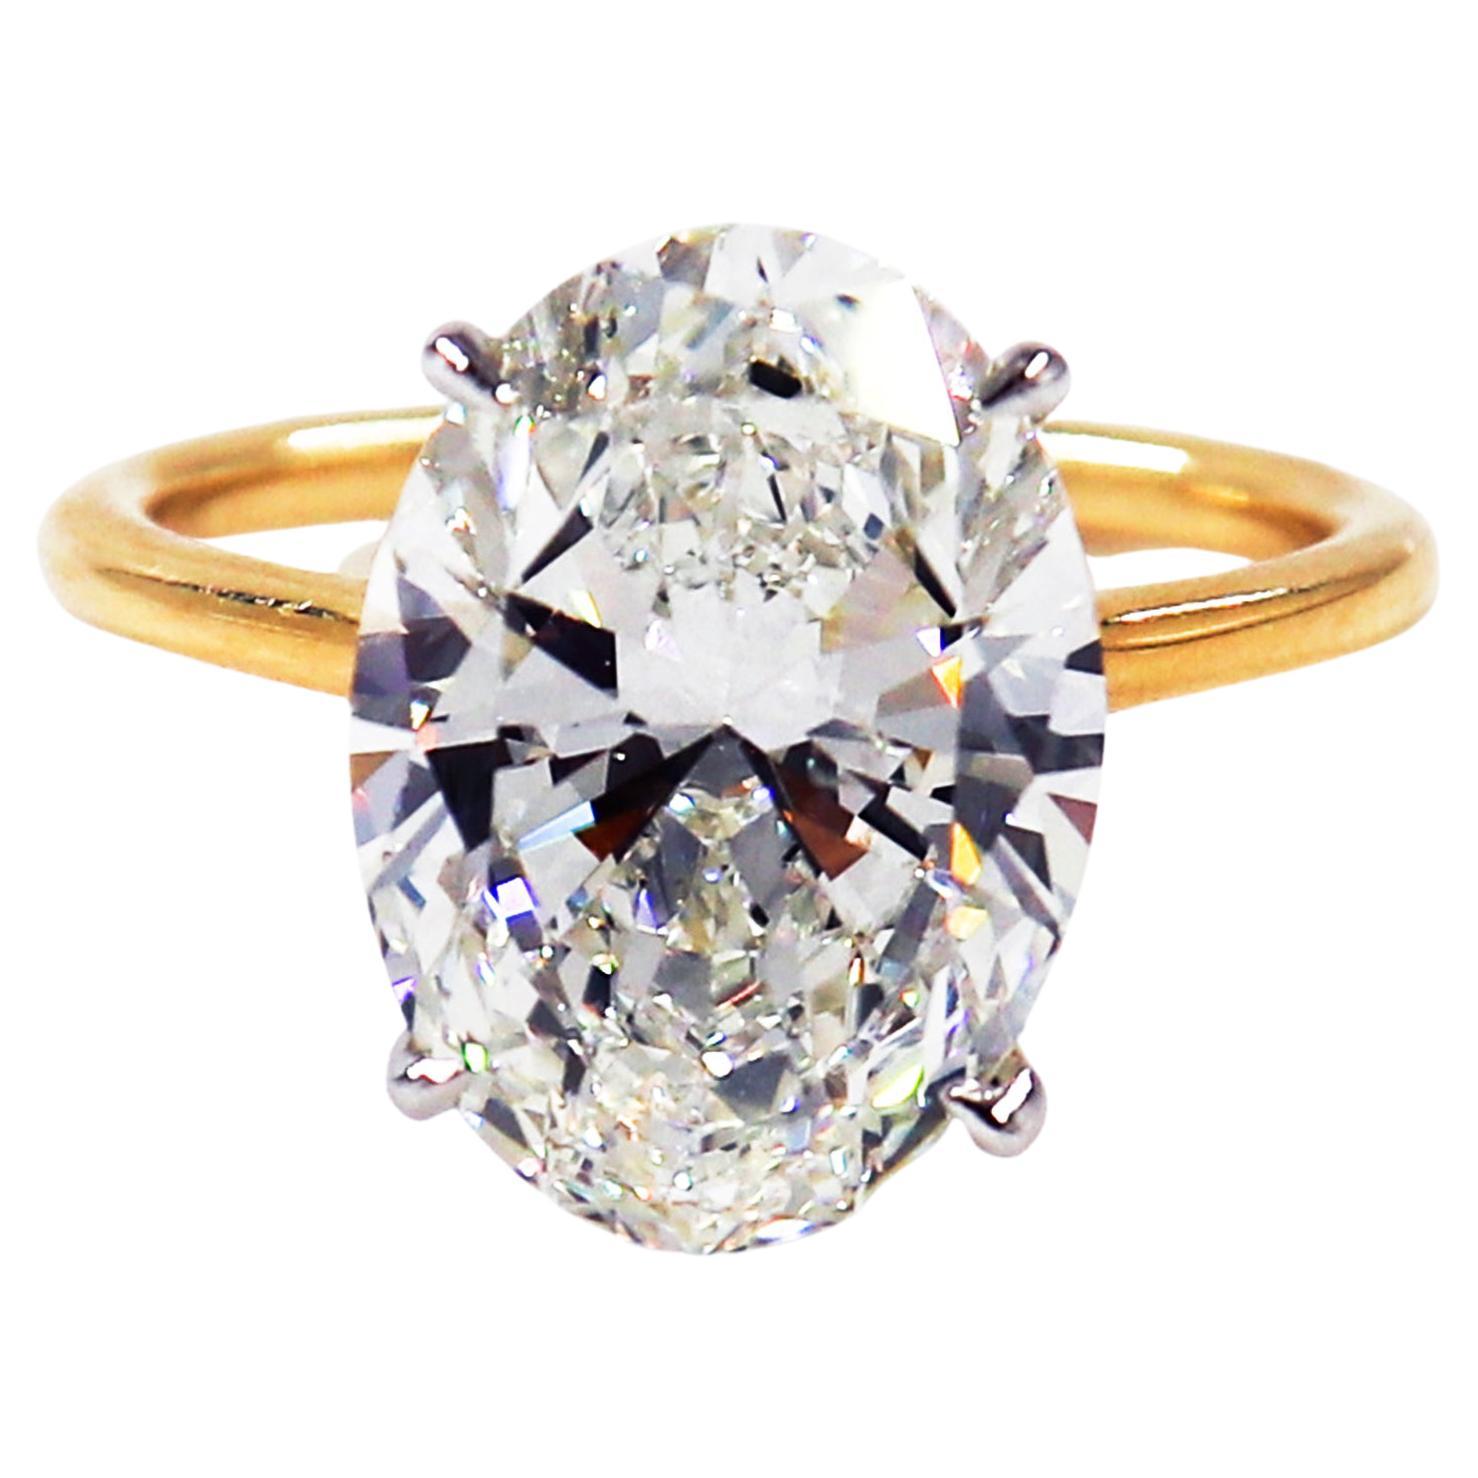 J. Birnbach 5.36 carat GIA Certified I SI2 Oval Diamond Ring